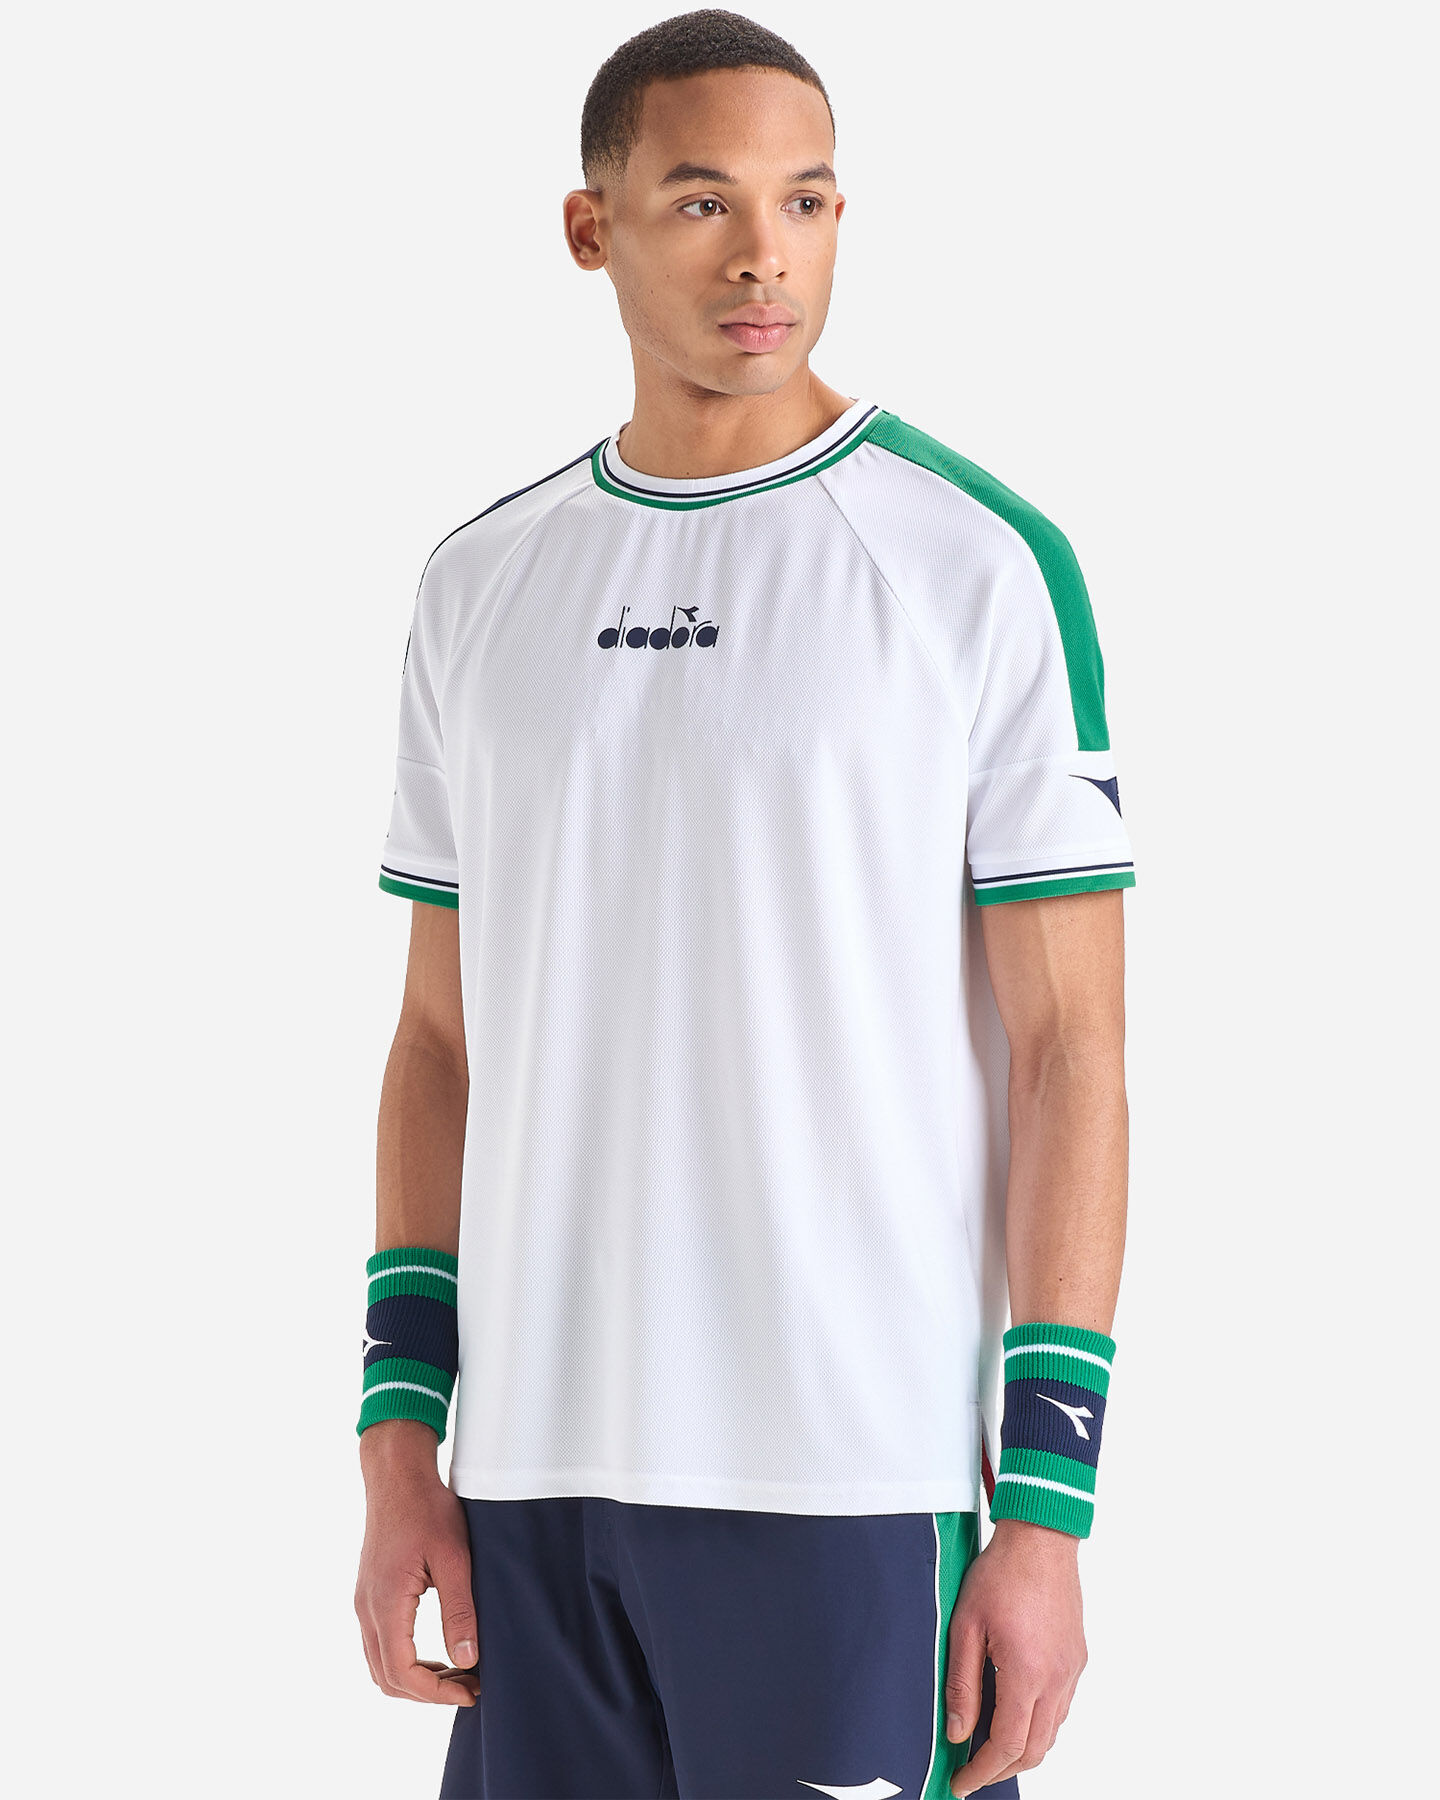  T-Shirt tennis DIADORA ICON M S5529666|20002|S scatto 1